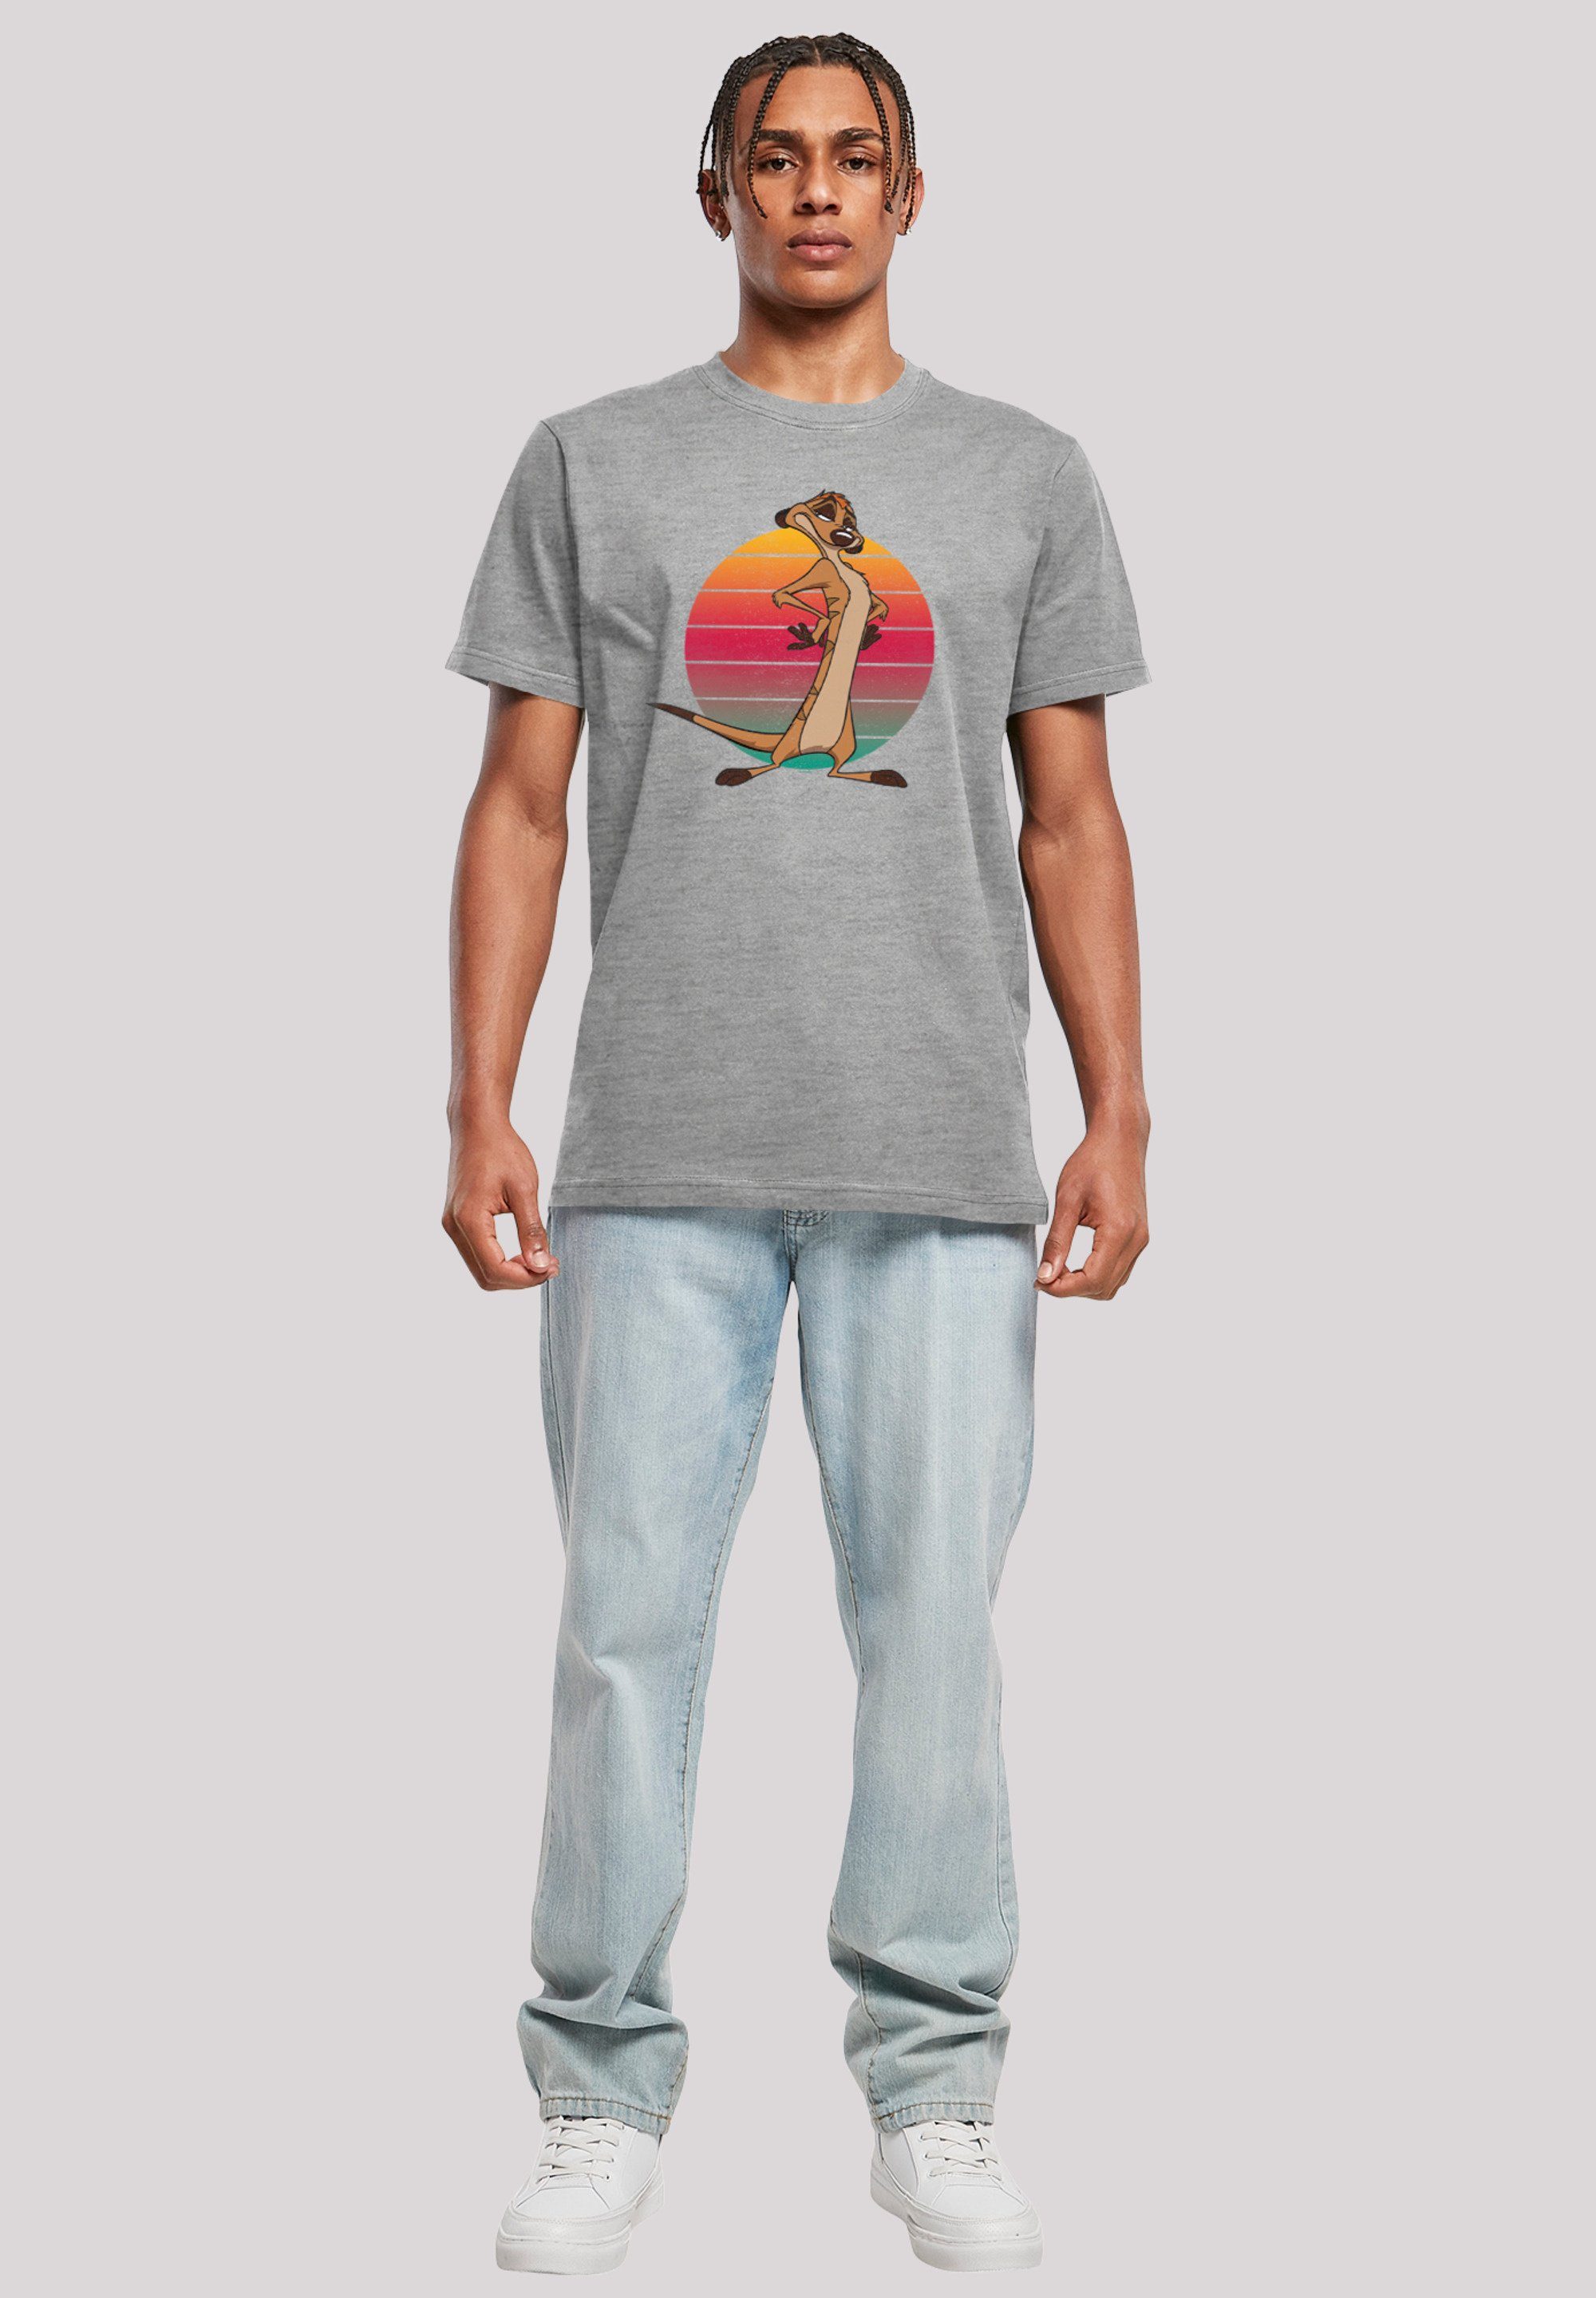 Timon der Disney Print Sunset König grey heather F4NT4STIC T-Shirt Löwen